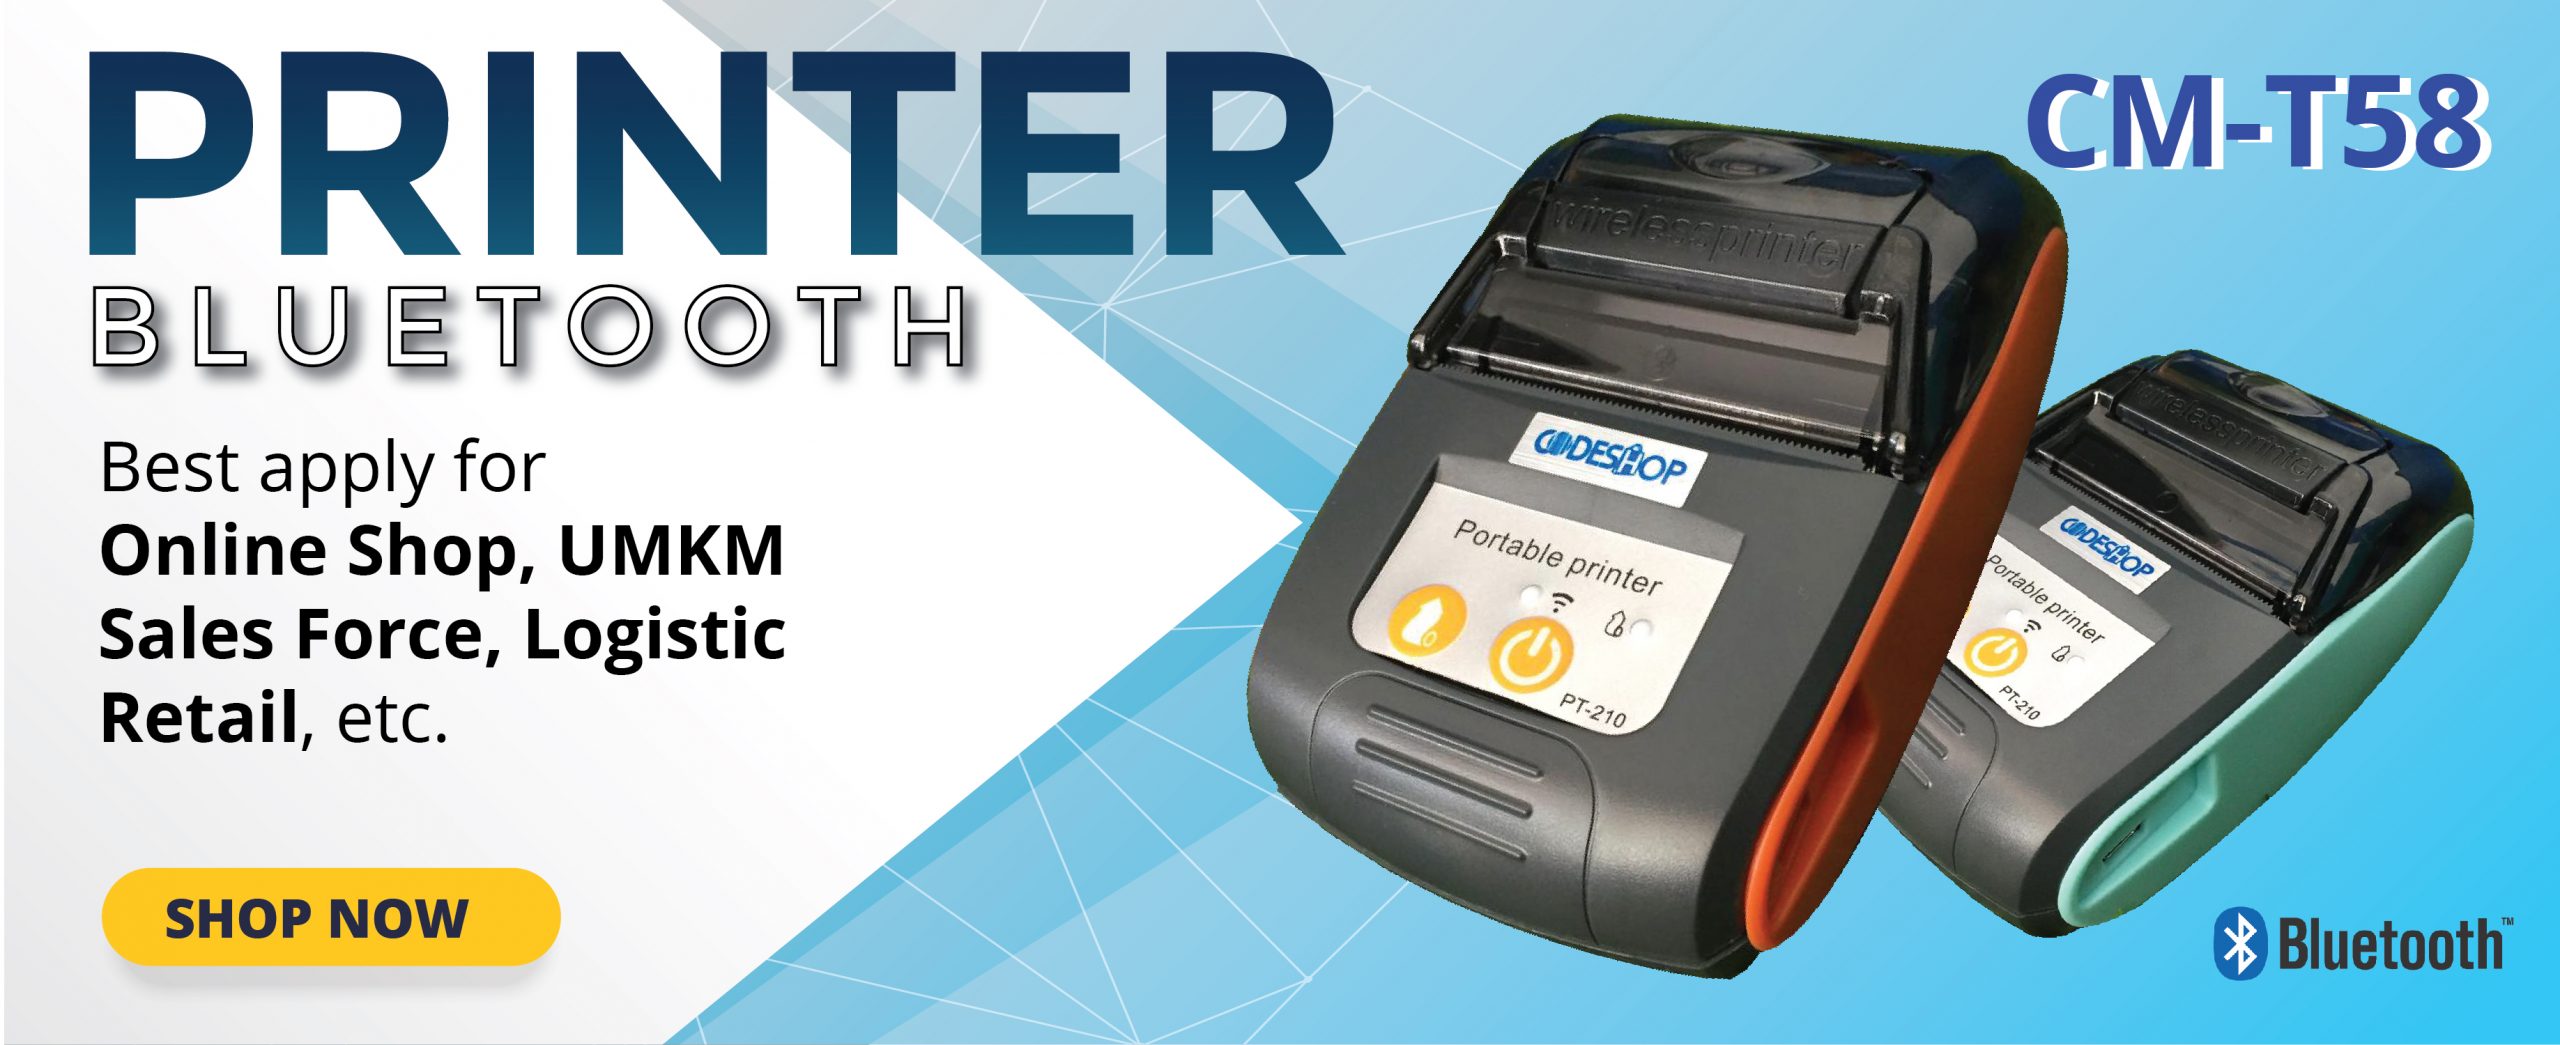 printer-bluetooth-thermal-58-codeshop-cmt58